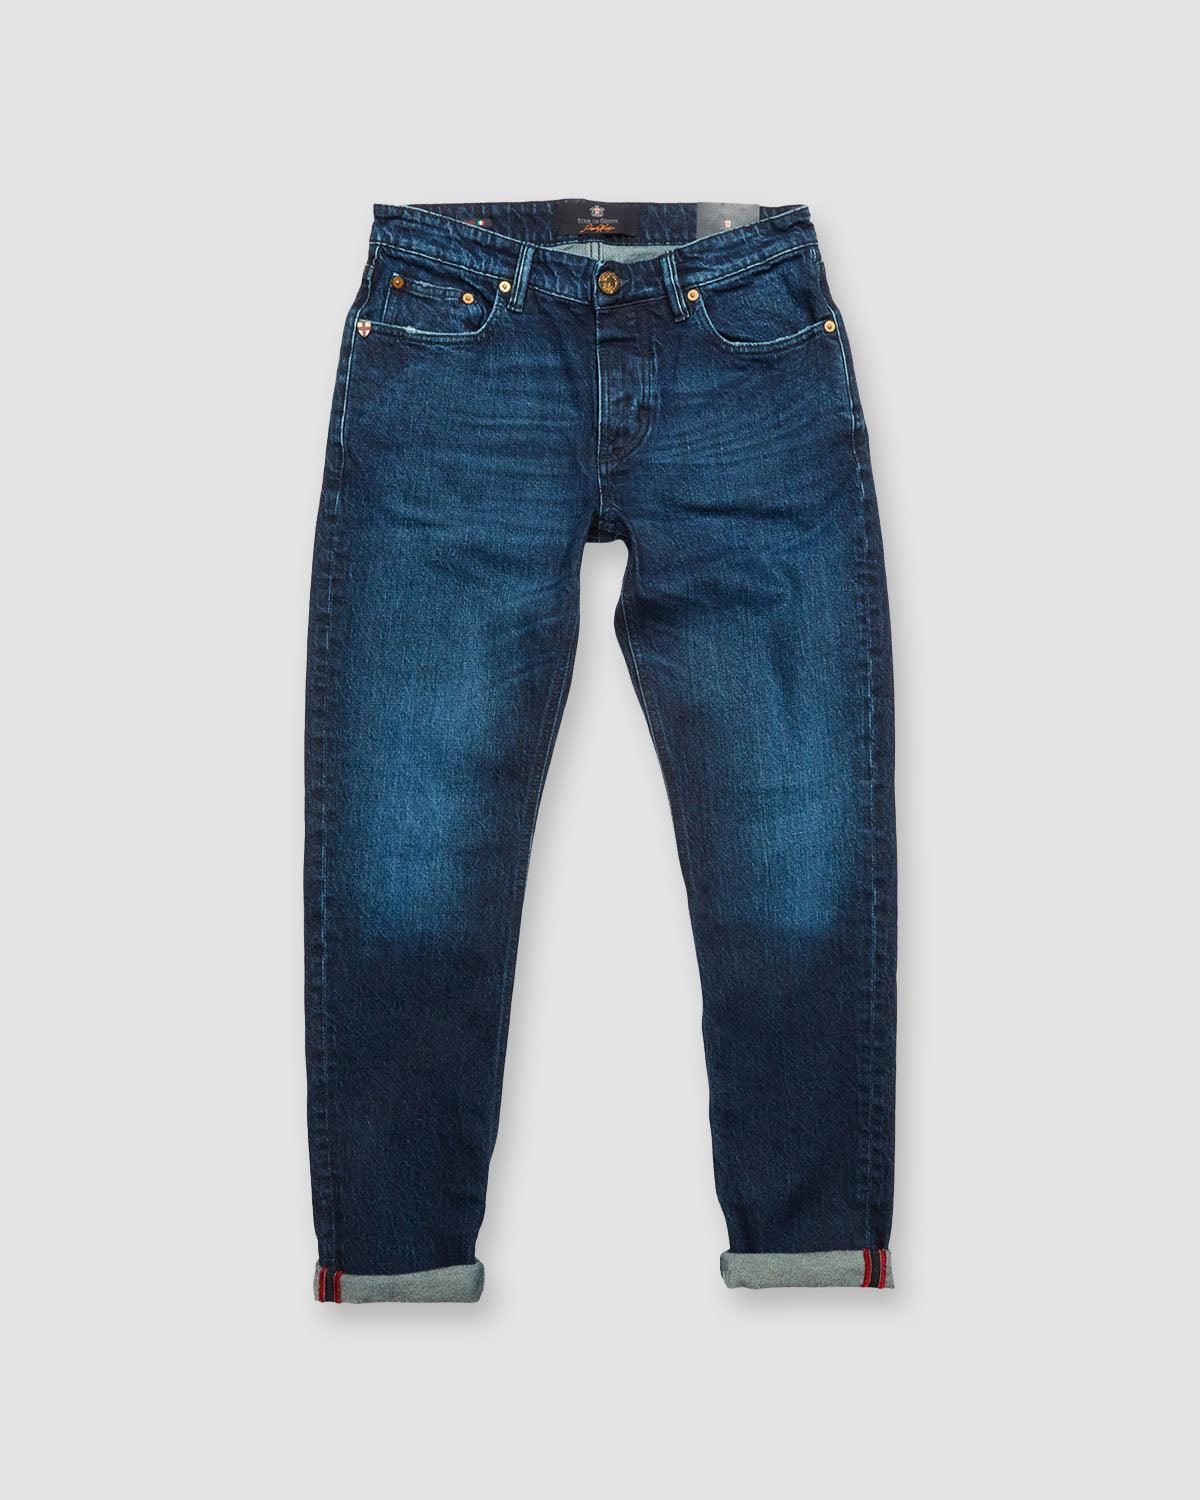 Vinci Chaby Dark Jeans - Mid Denim Blue - Blue de Genes - Kul og Koks